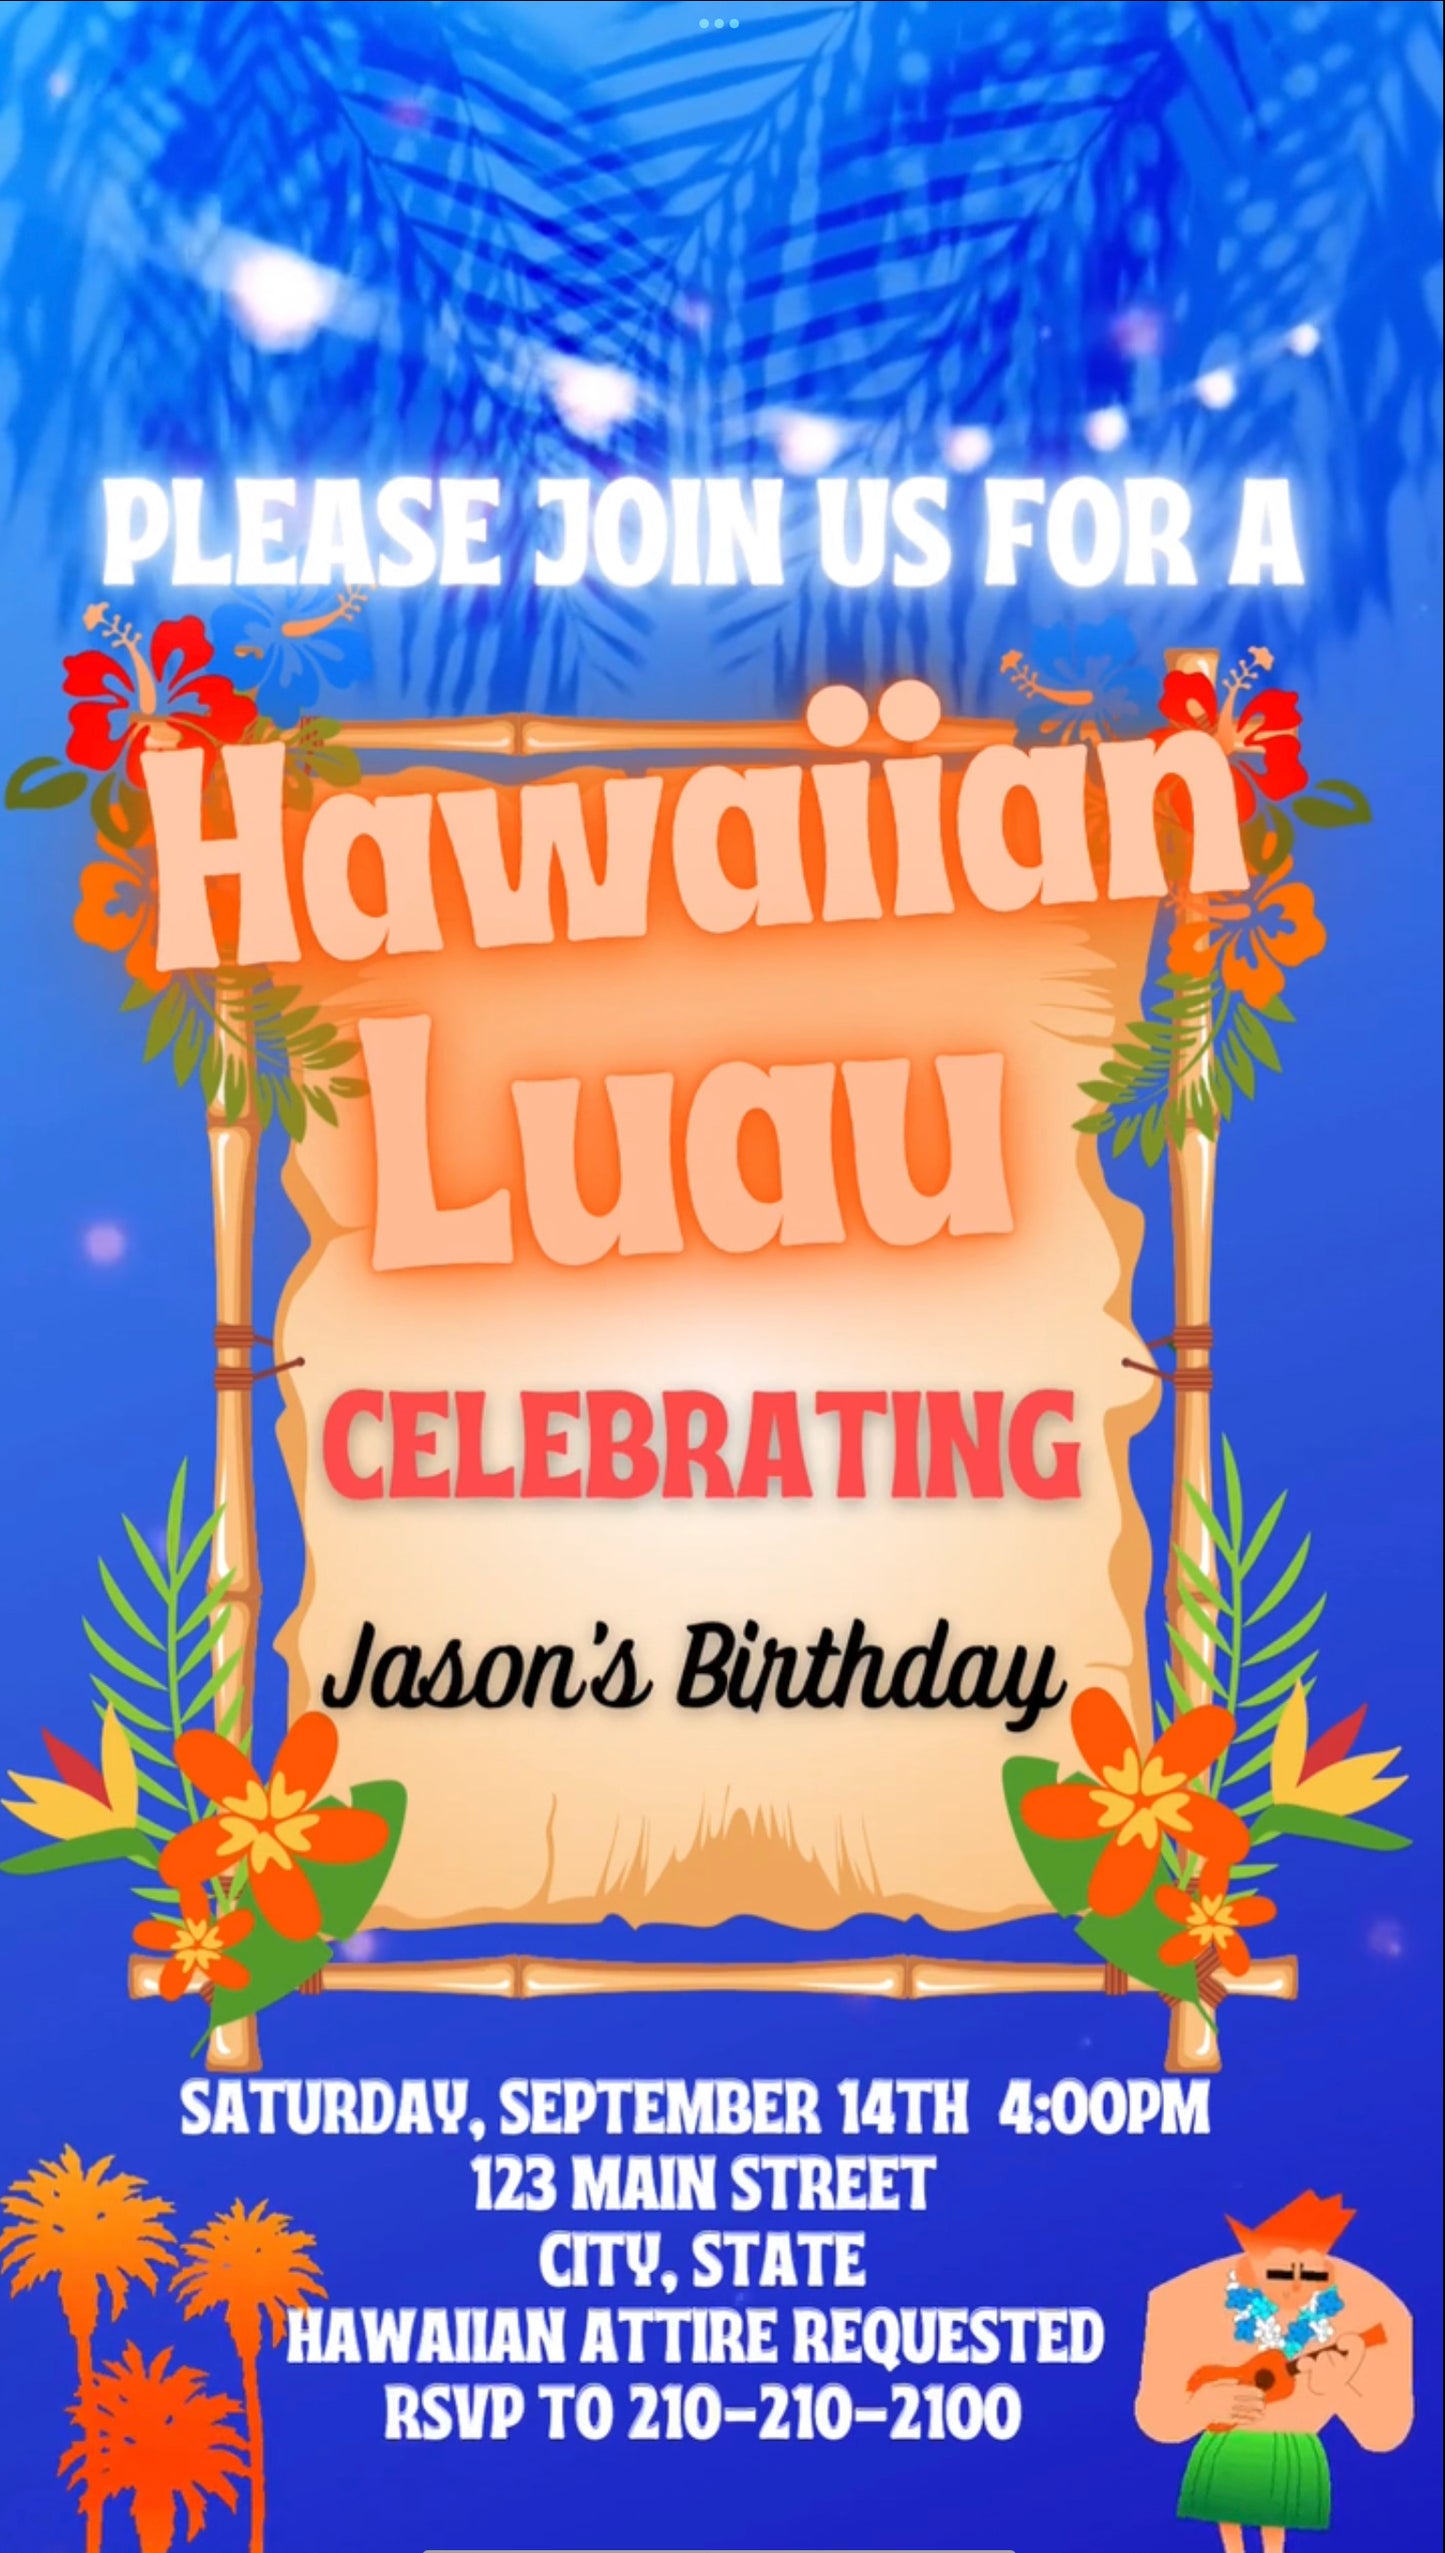 Hawaiian Luau Video Invitation